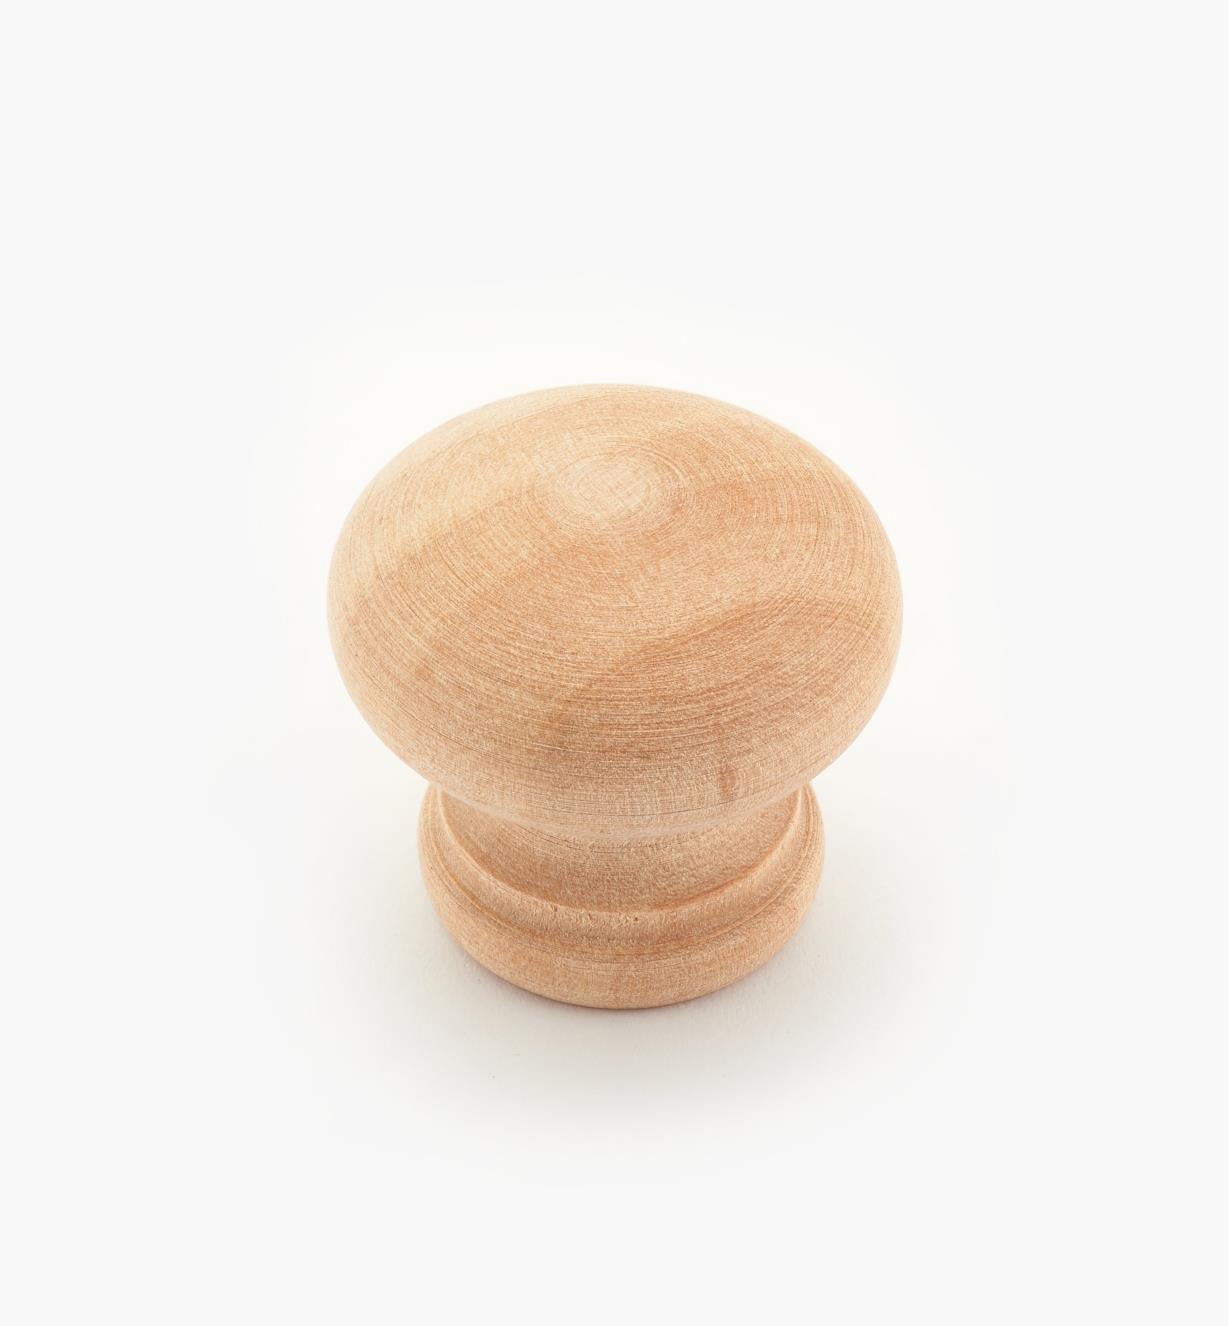 02G1012 - Bouton en bois de fil, érable, 1 3/16 po x 1 po